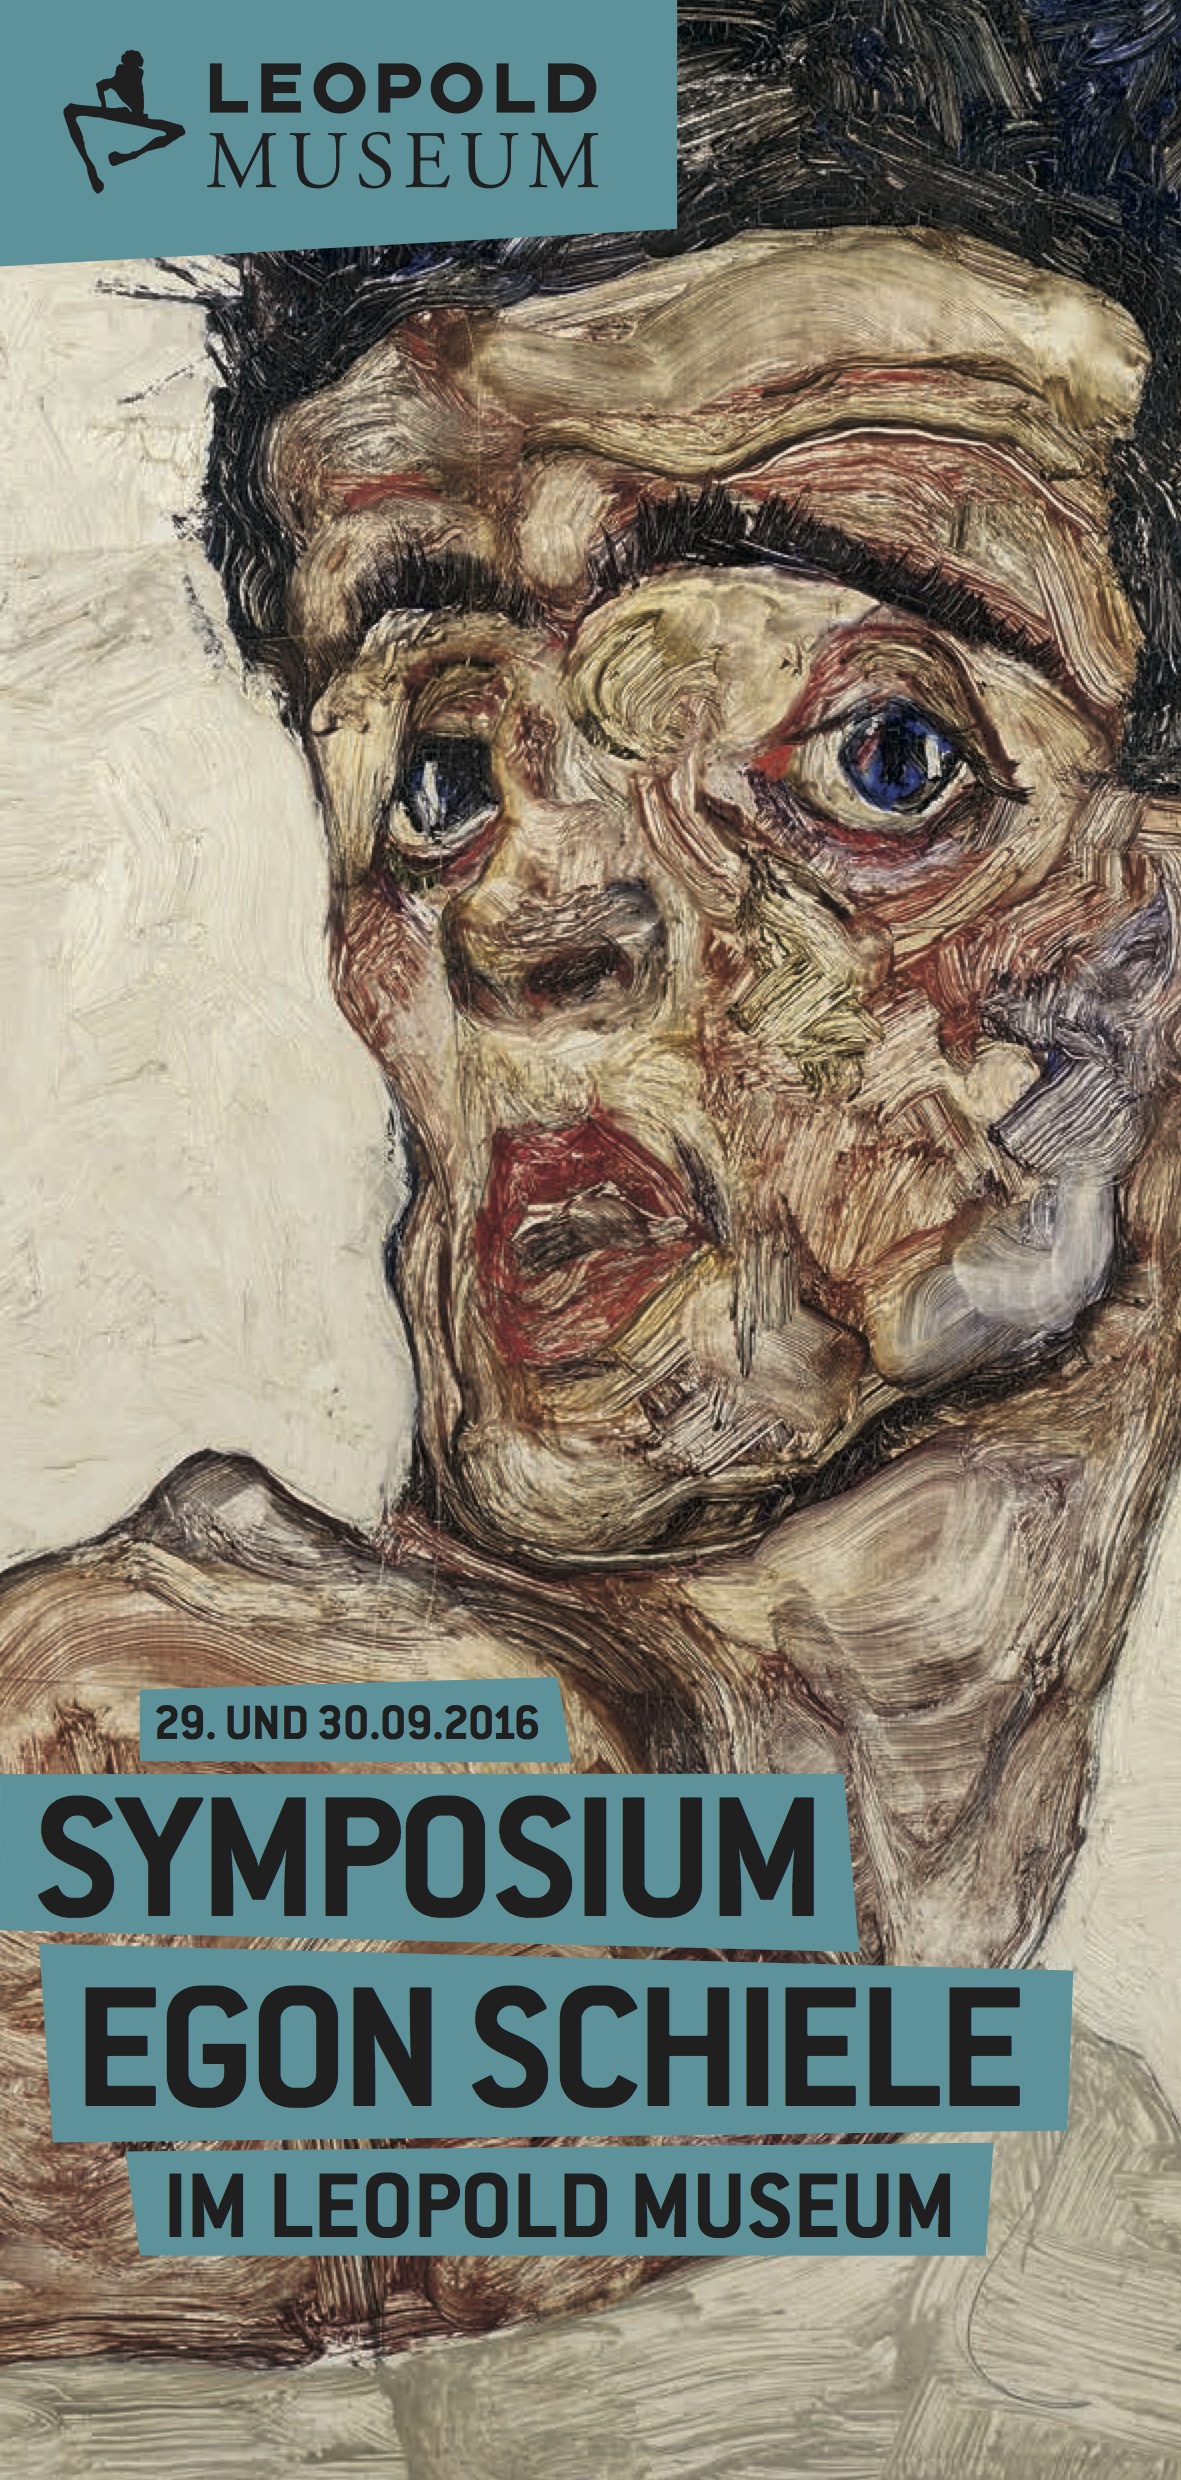 Egon Schiele Symposium, Bild: Leopold Museum Wien, 29./30.09.2016.